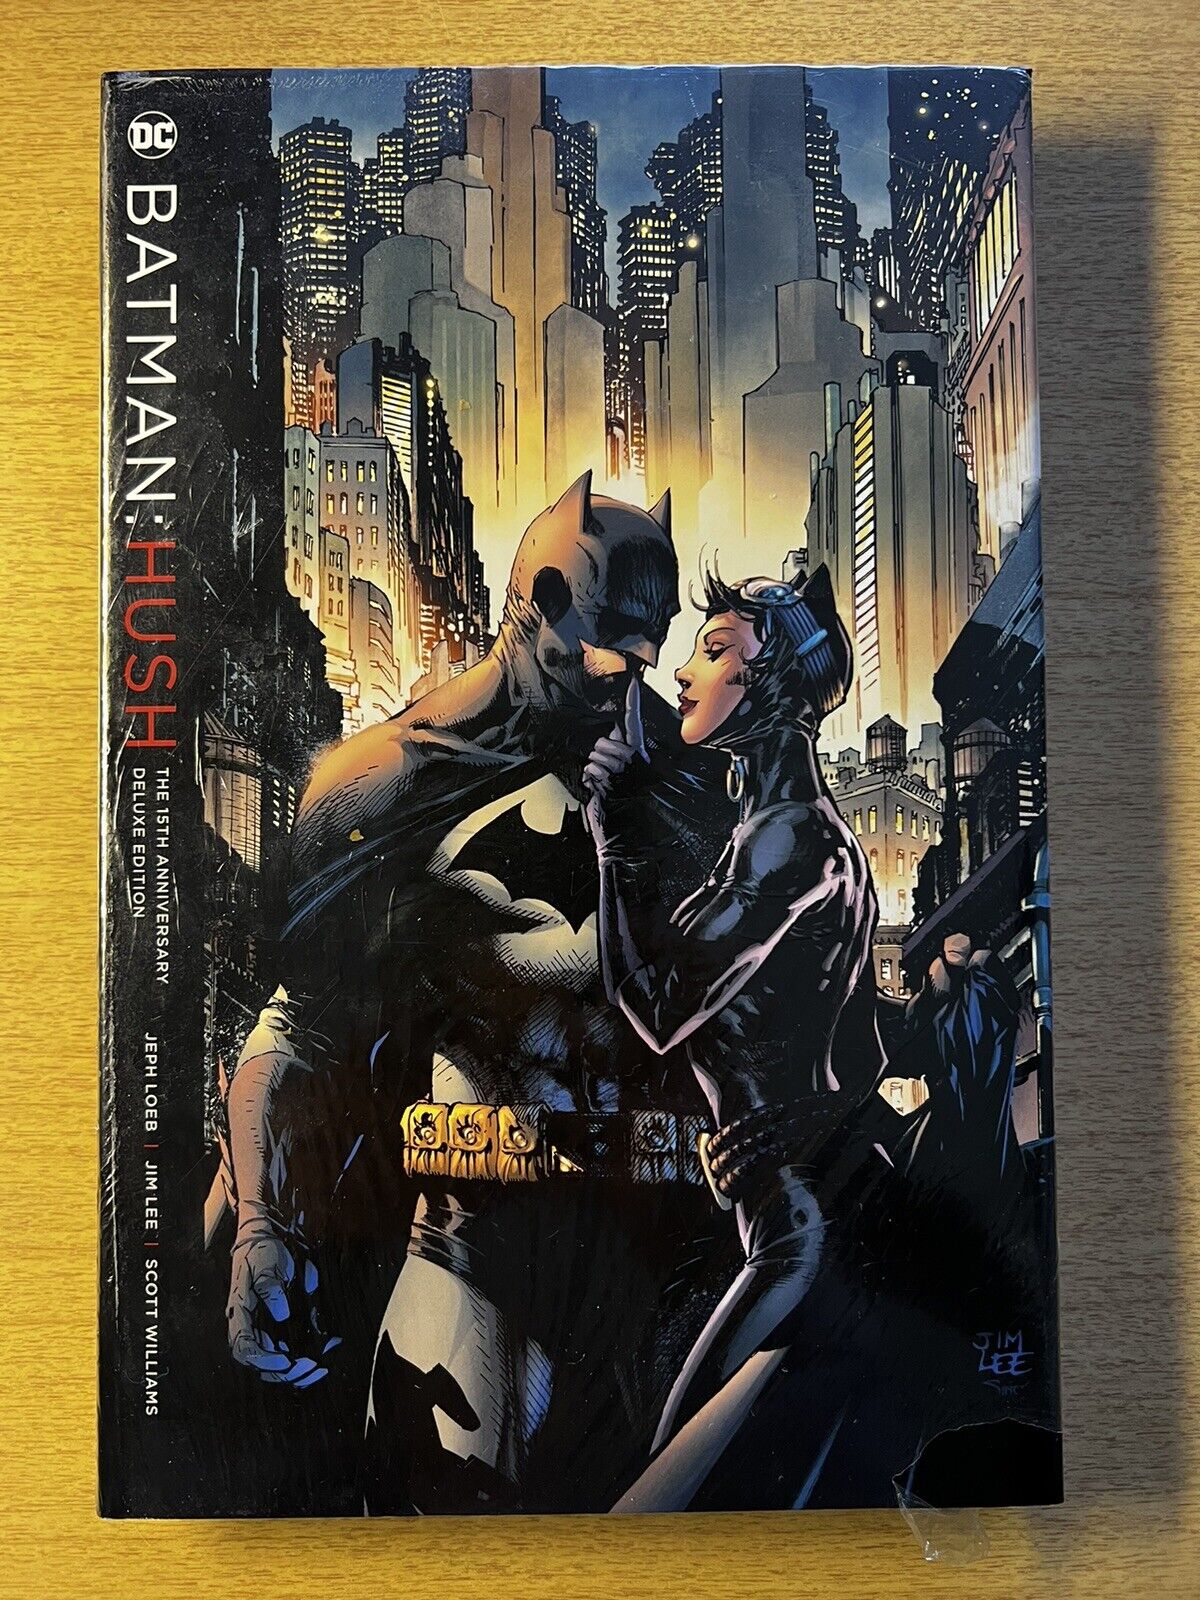 BATMAN: HUSH - 15th Anniversary DELUXE Edition - Hardcover - Brand NEW - Sealed